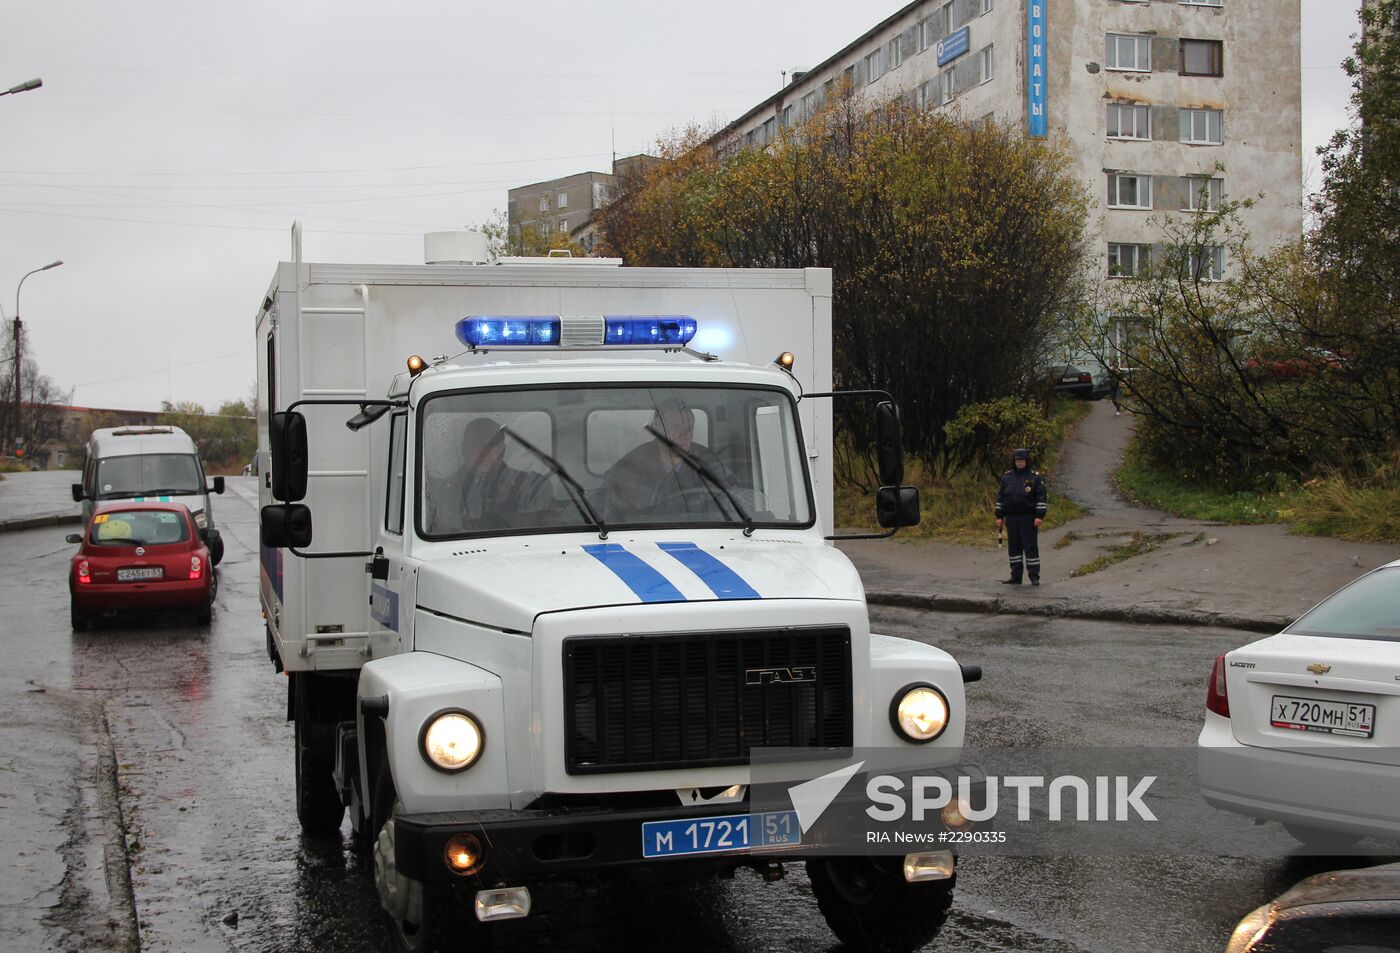 Murmansk Court arrests Prirazlomnaya attackers